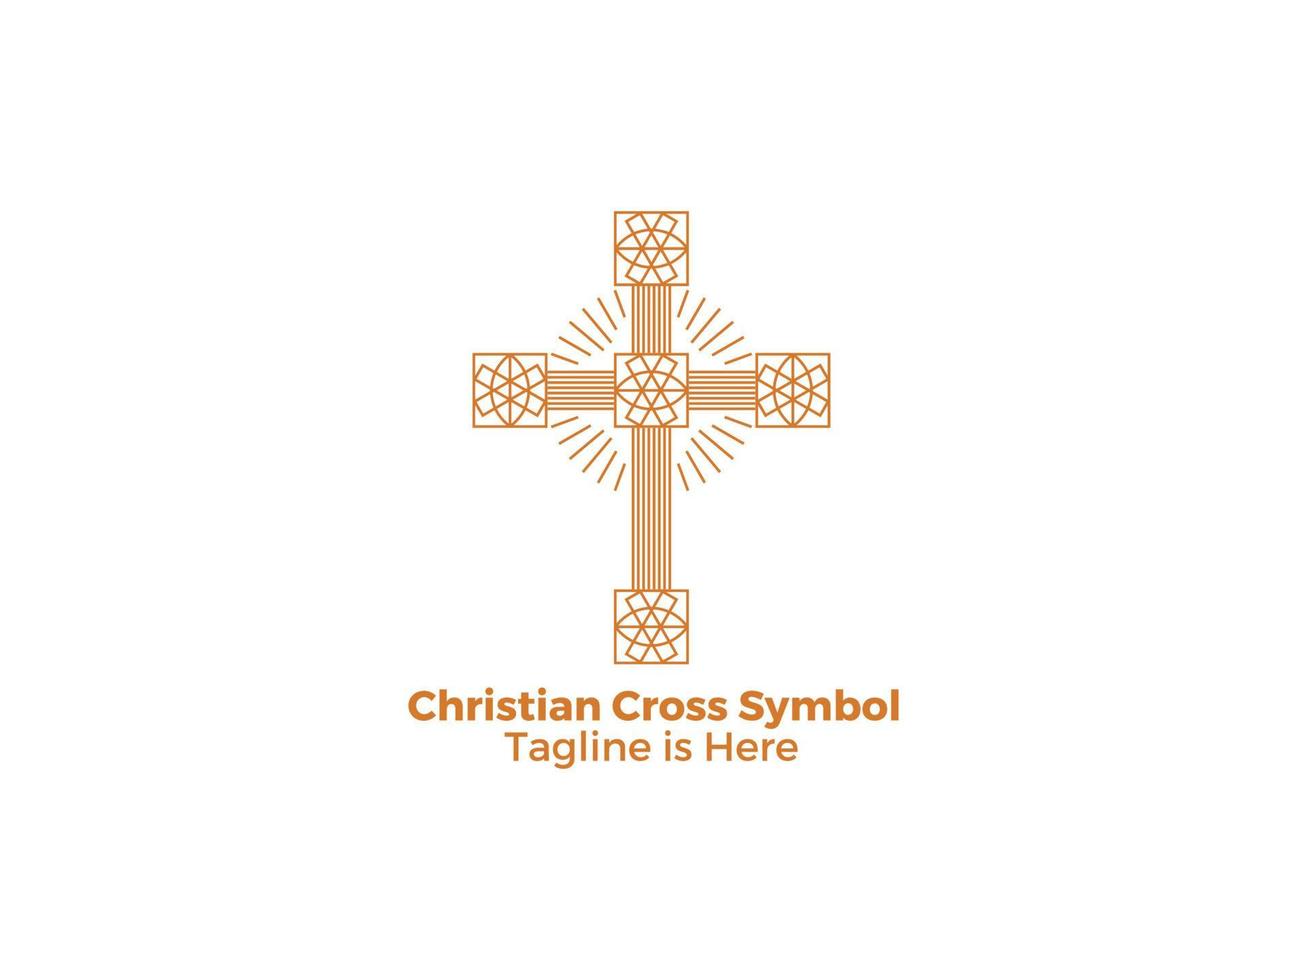 icono de cruz de catolicismo cristiano de religión ornamental aislado en vector libre de fondo blanco